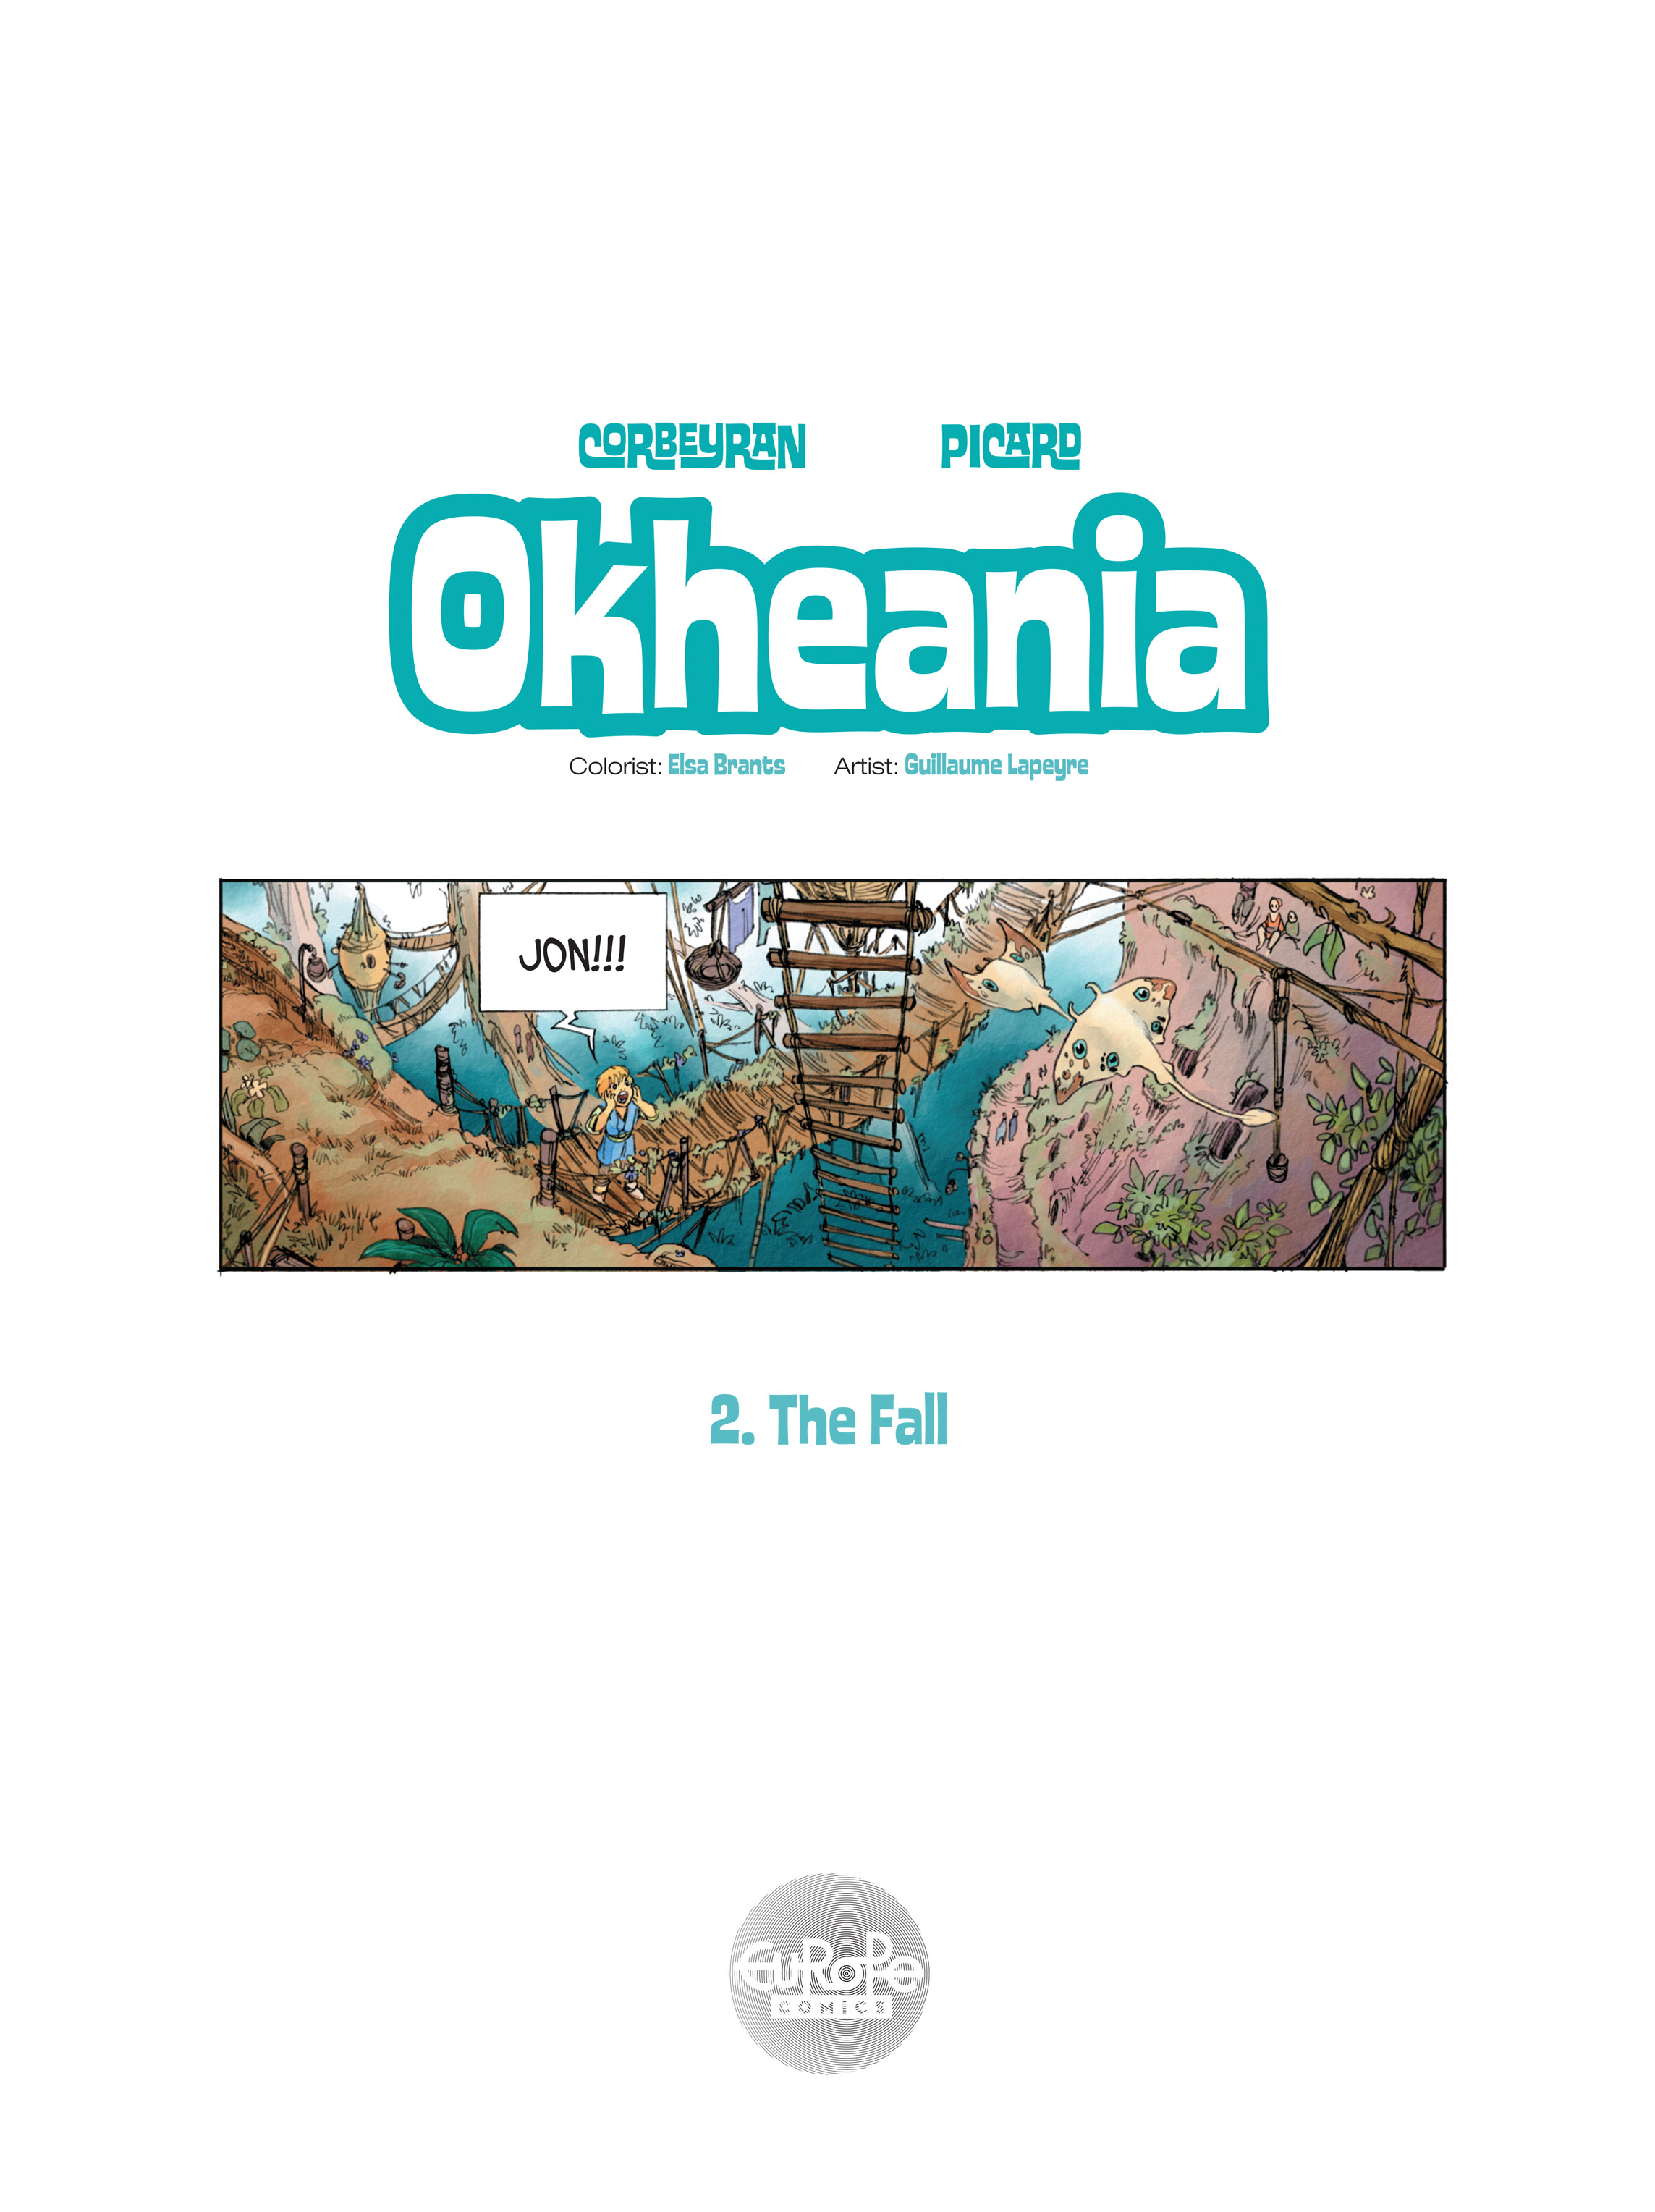 Read online Okheania comic -  Issue #2 - 3